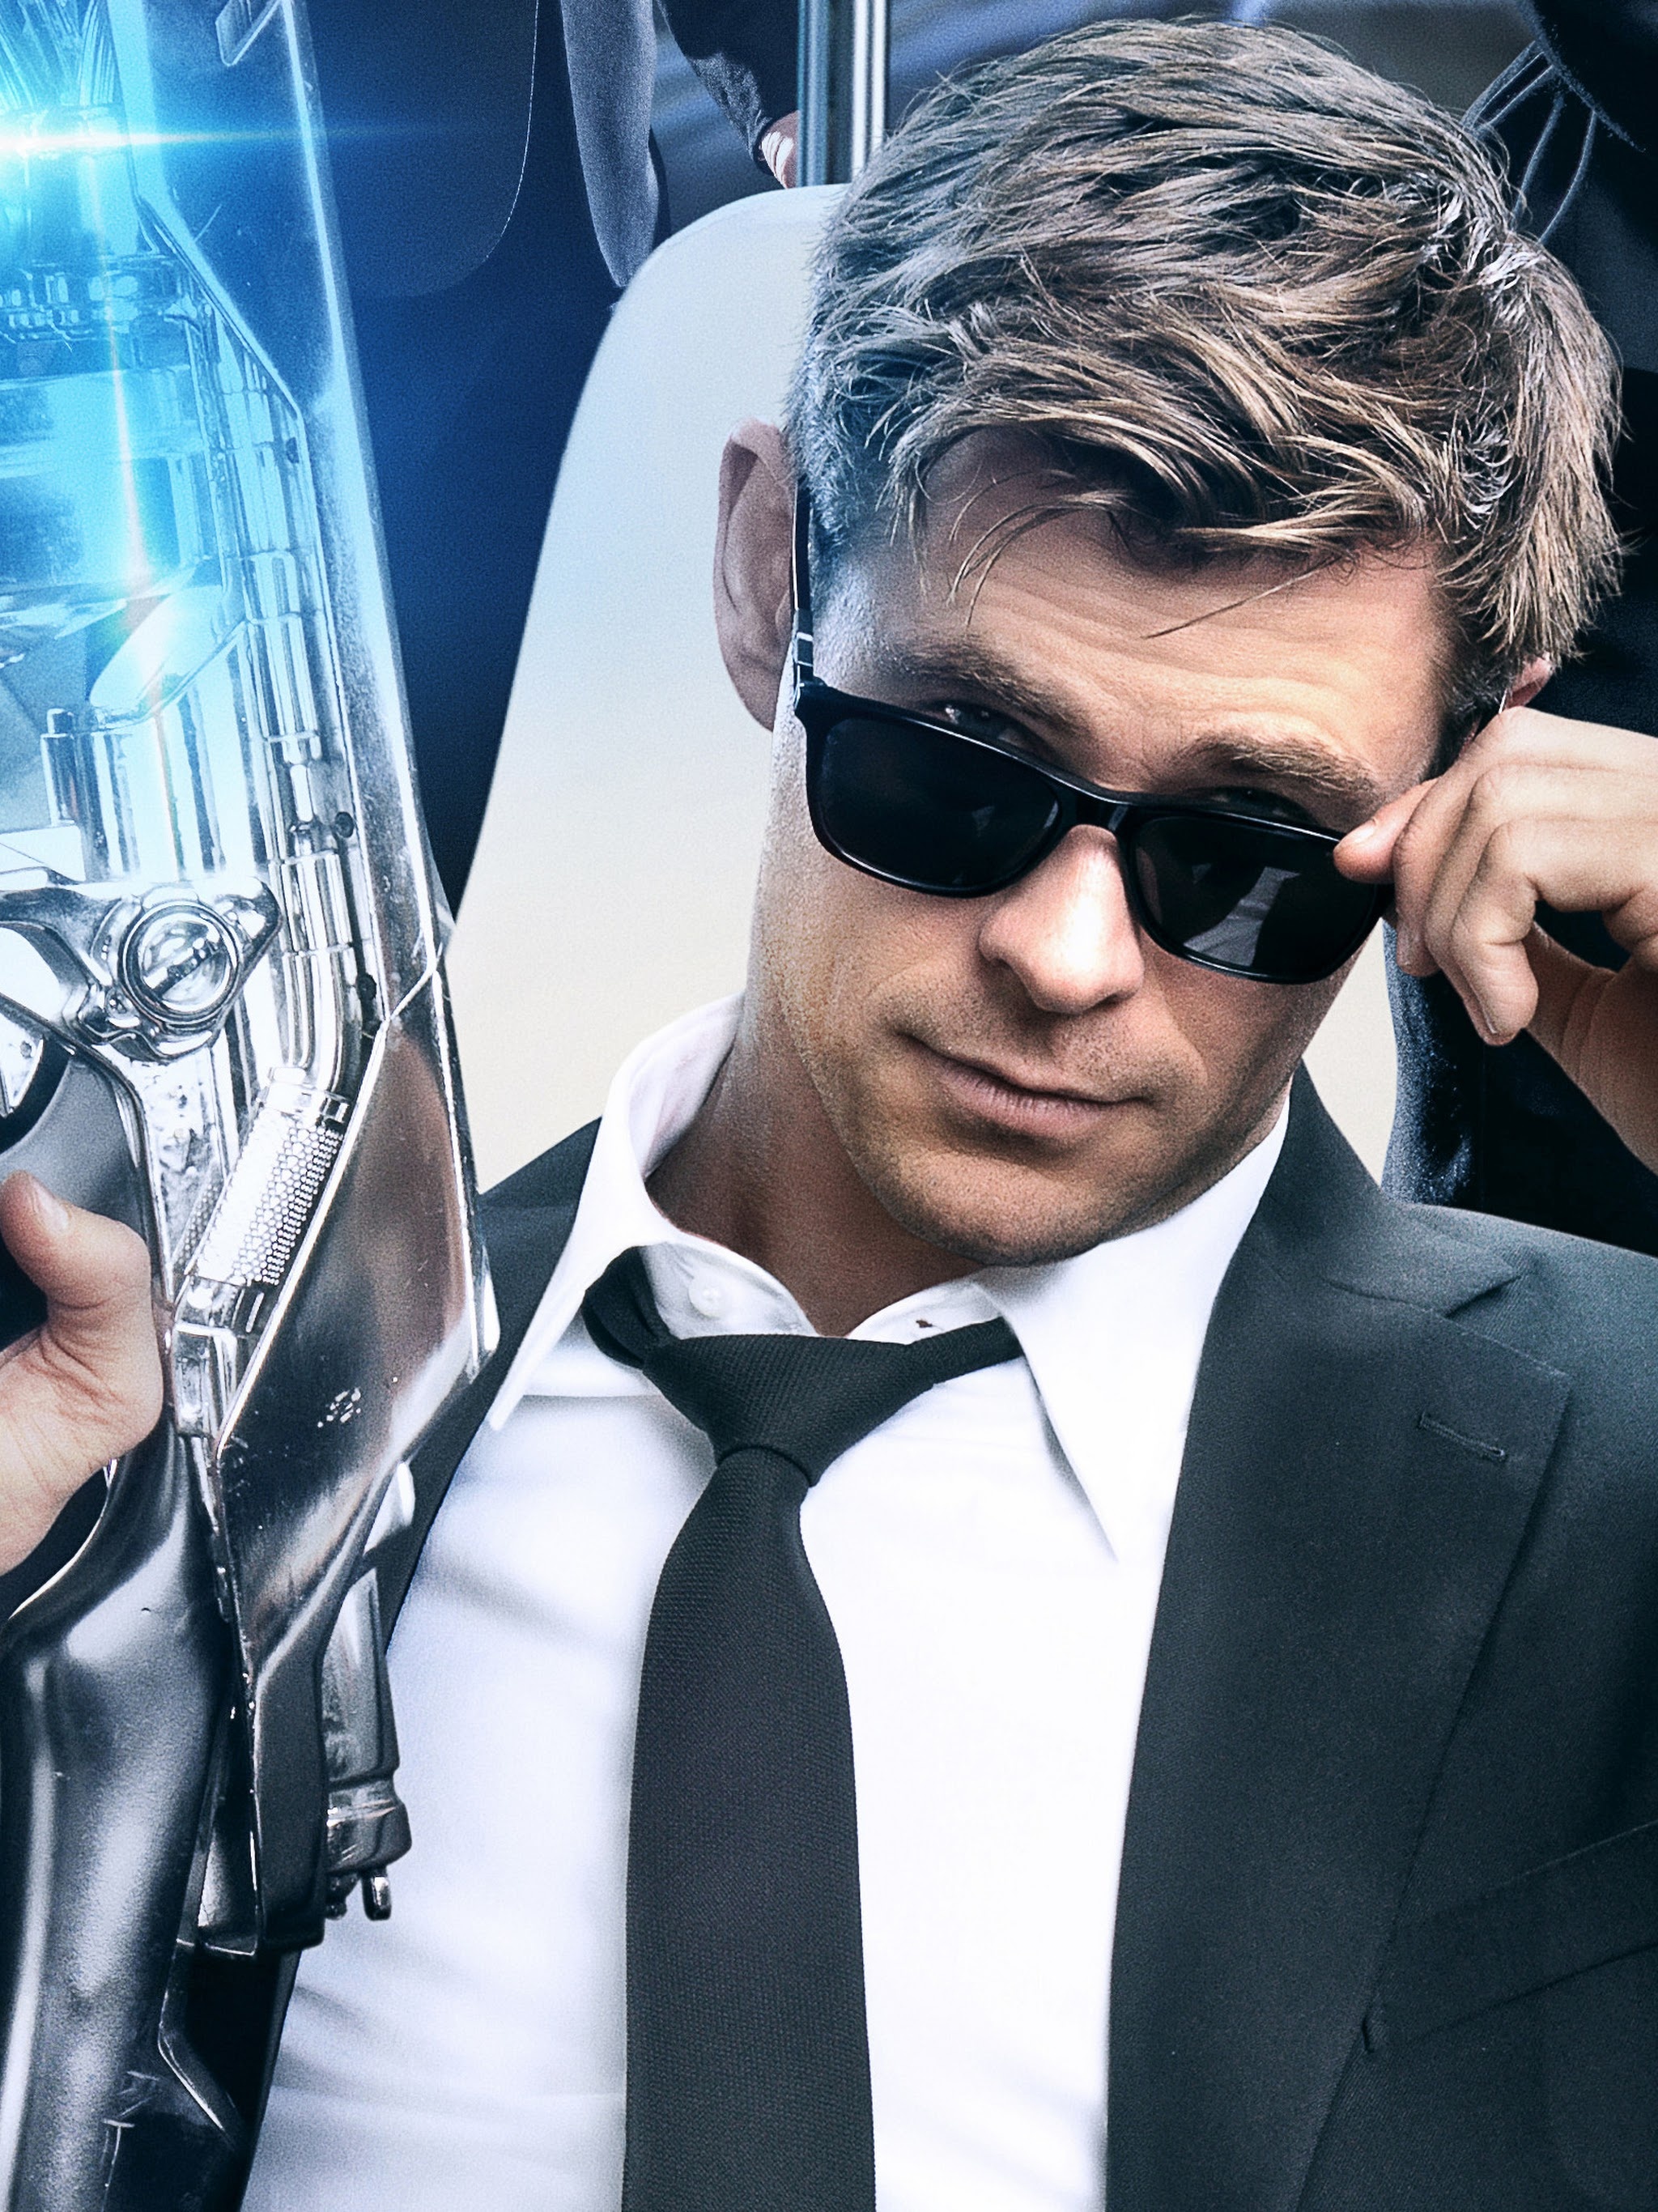 Chris Hemsworth: Known for starring Men in Black: International, Henry, Agent H. 2050x2740 HD Wallpaper.